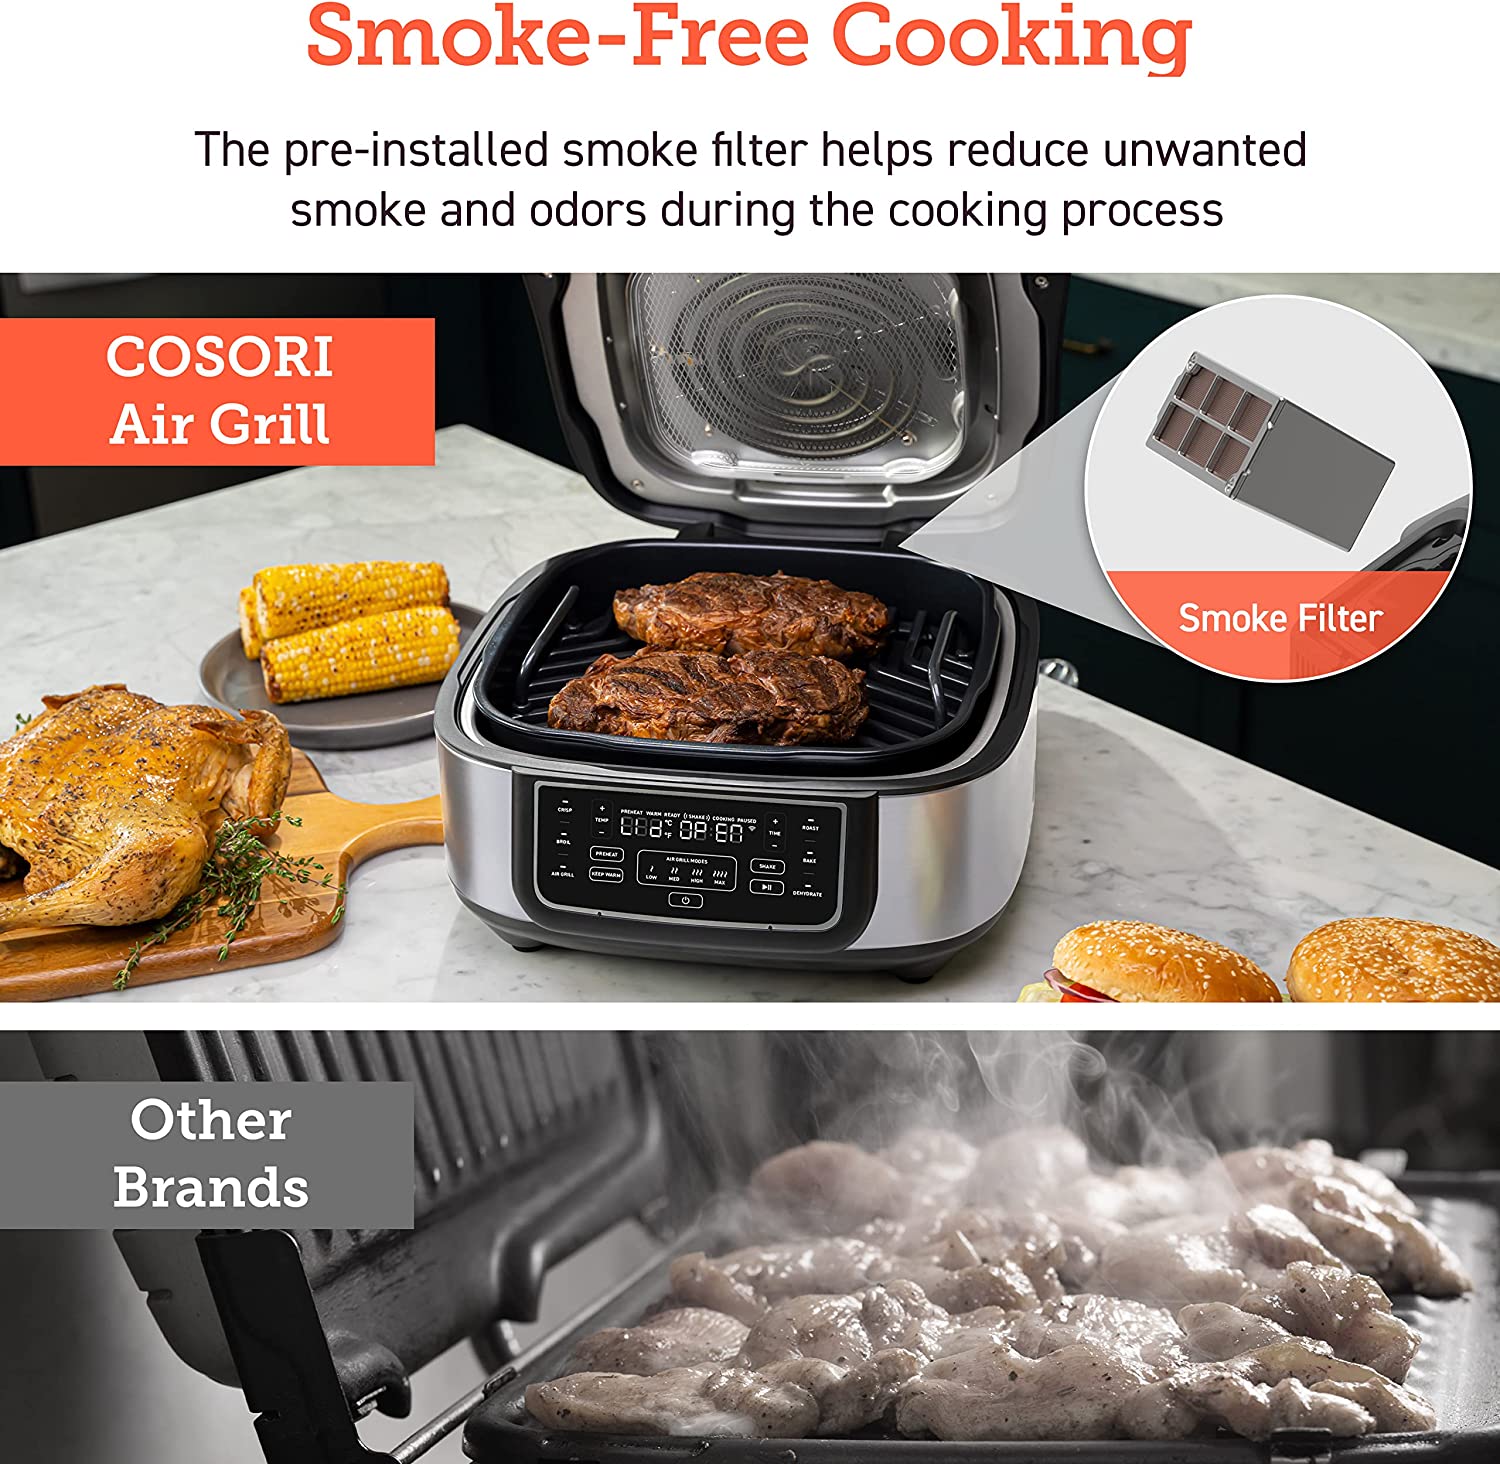 https://kitchenteller.com/wp-content/uploads/2022/11/Smokeless-Cooking-COSORI-Indoor-Grill-Air-Fryer-Combo-review.jpg